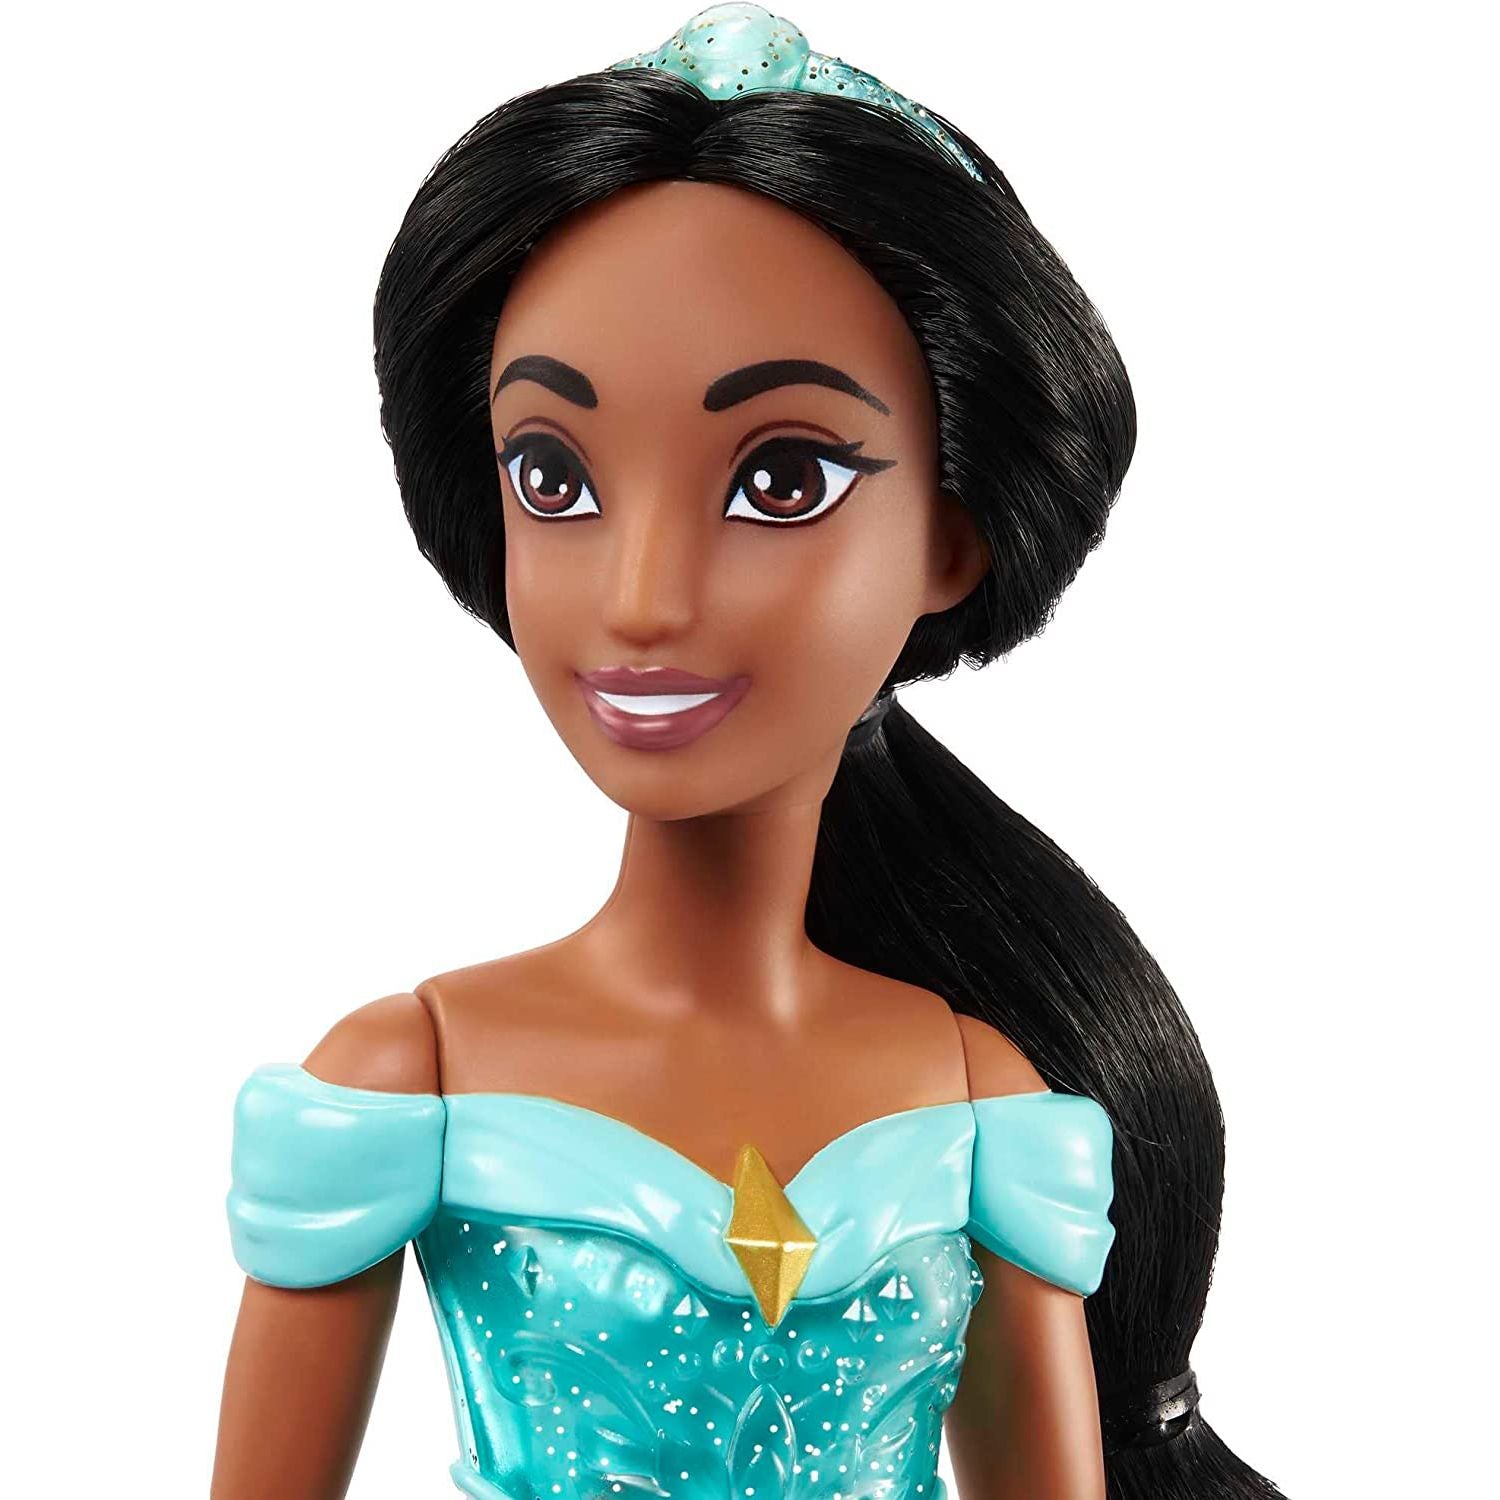 Mattel Disney Princess Jasmine Fashion Doll, Sparkling Look with Black Hair, Brown Eyes & Tiara Accessory